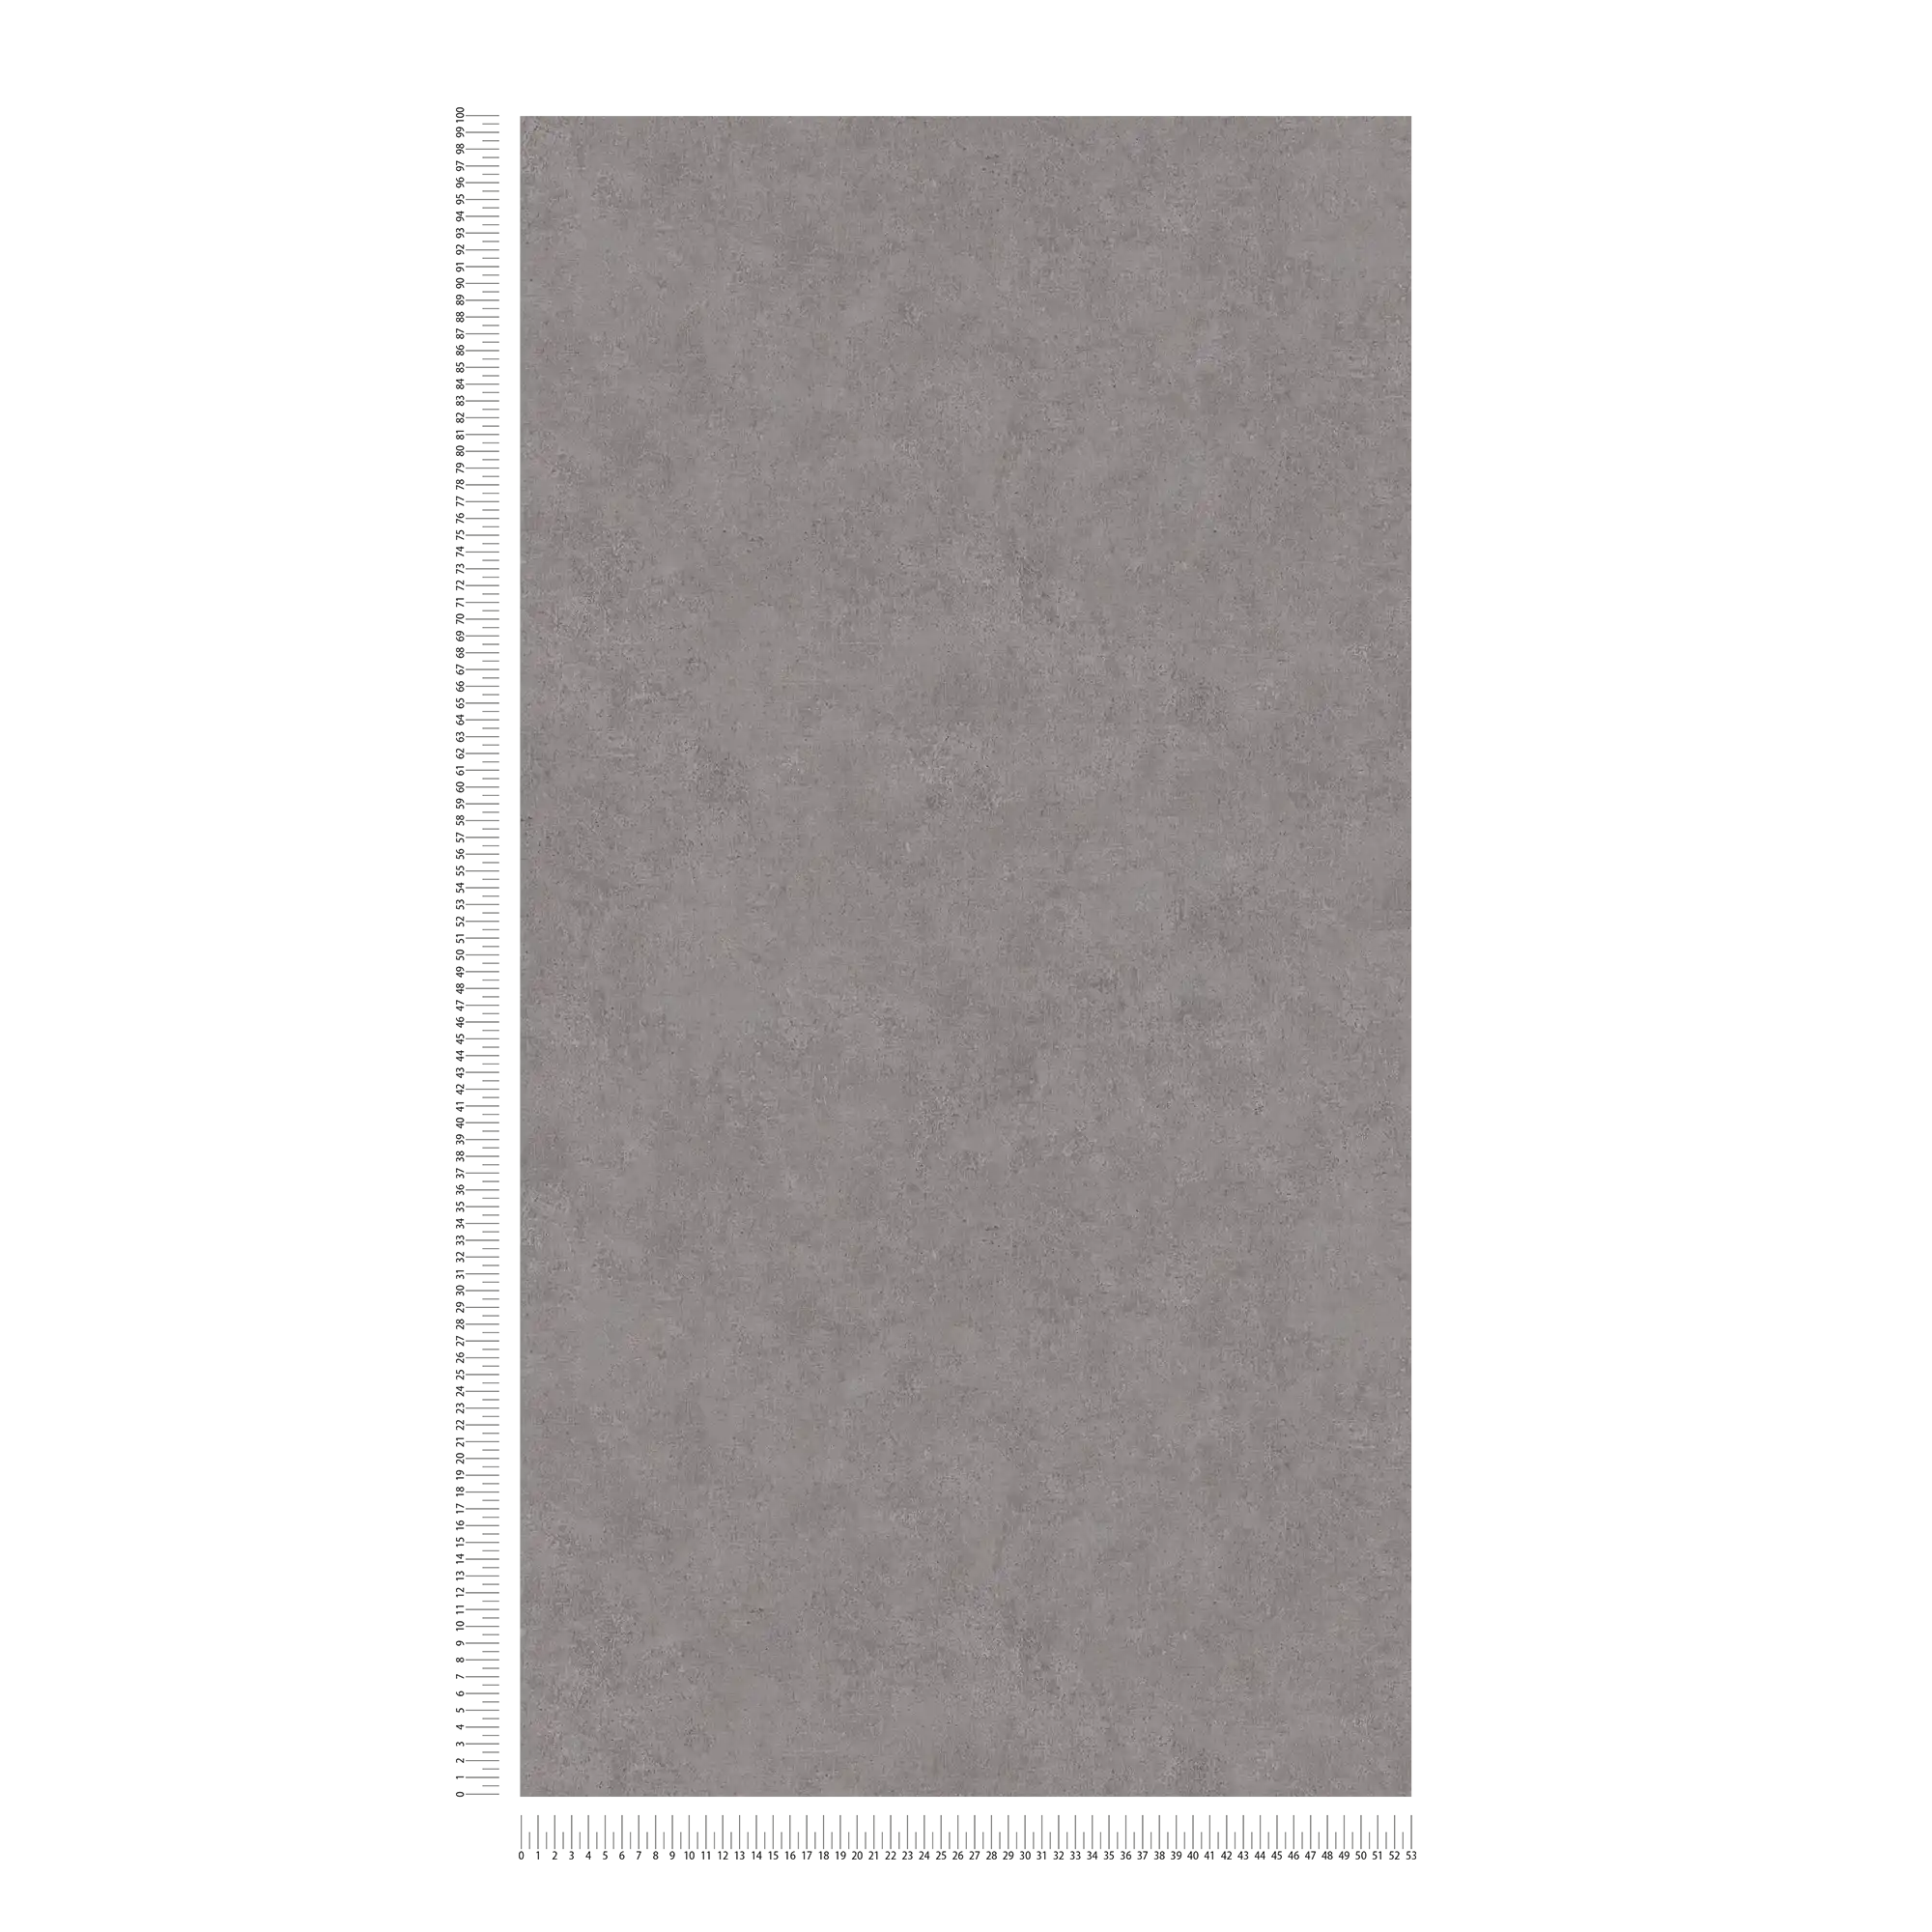             Non-woven wallpaper plain, colour pattern & vintage look - grey
        